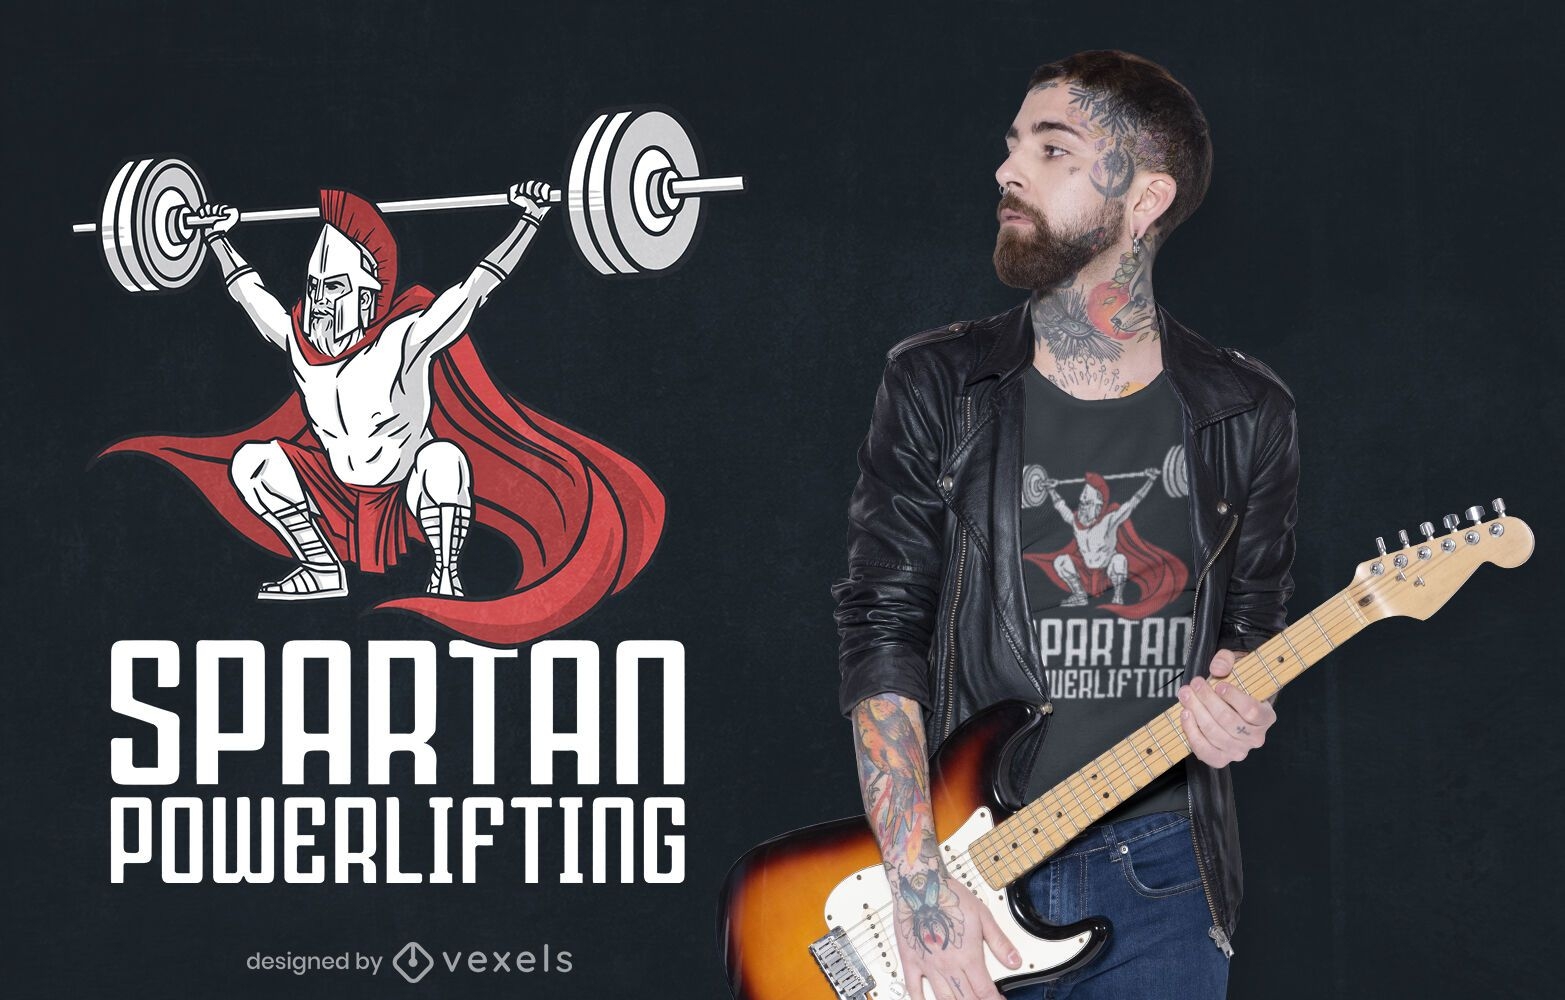 Spartan powerlifting t-shirt design